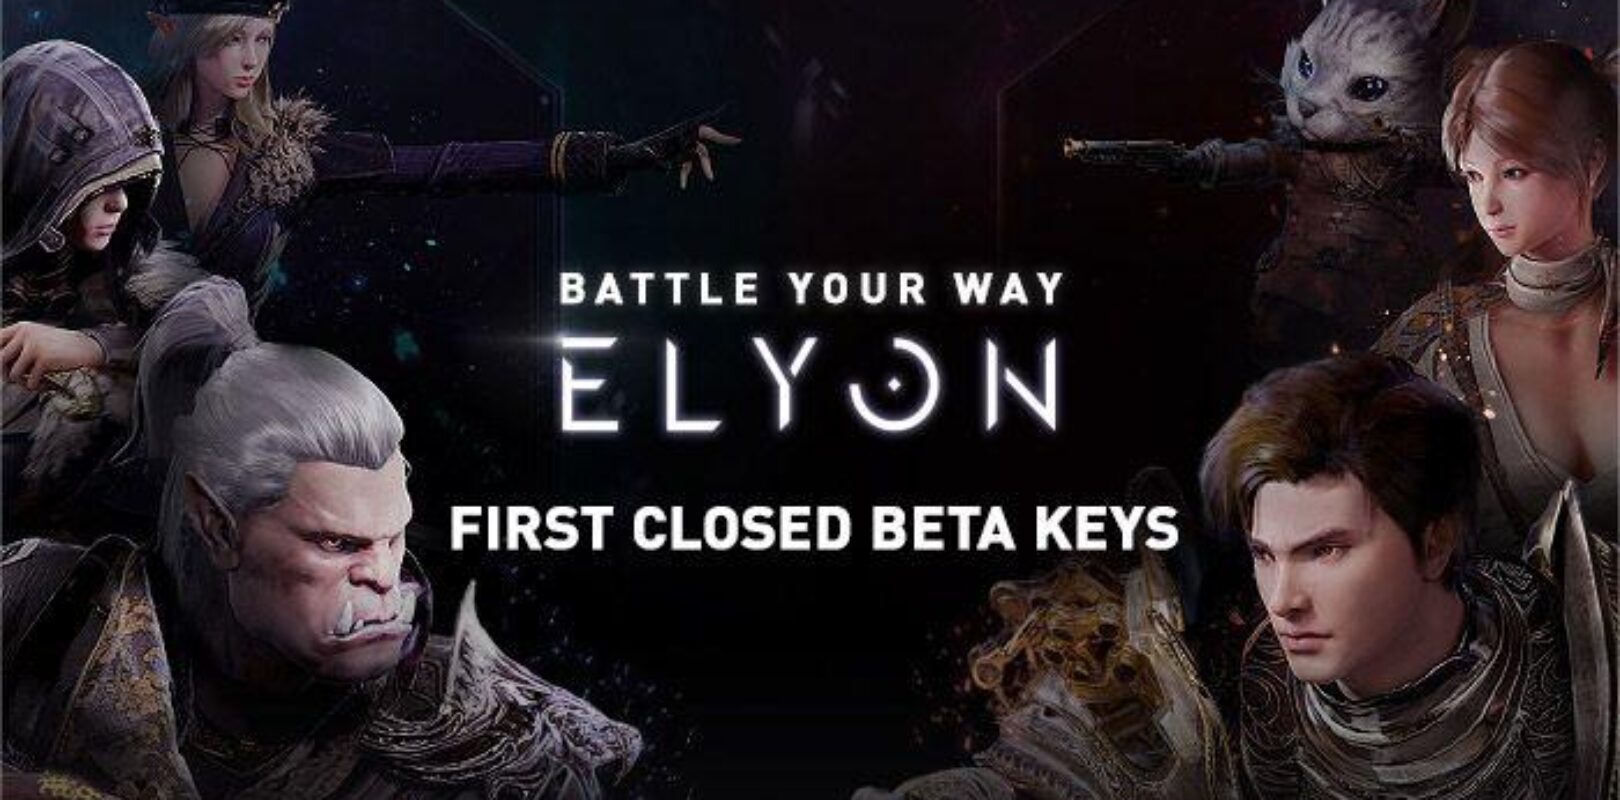 elyon closed beta 2